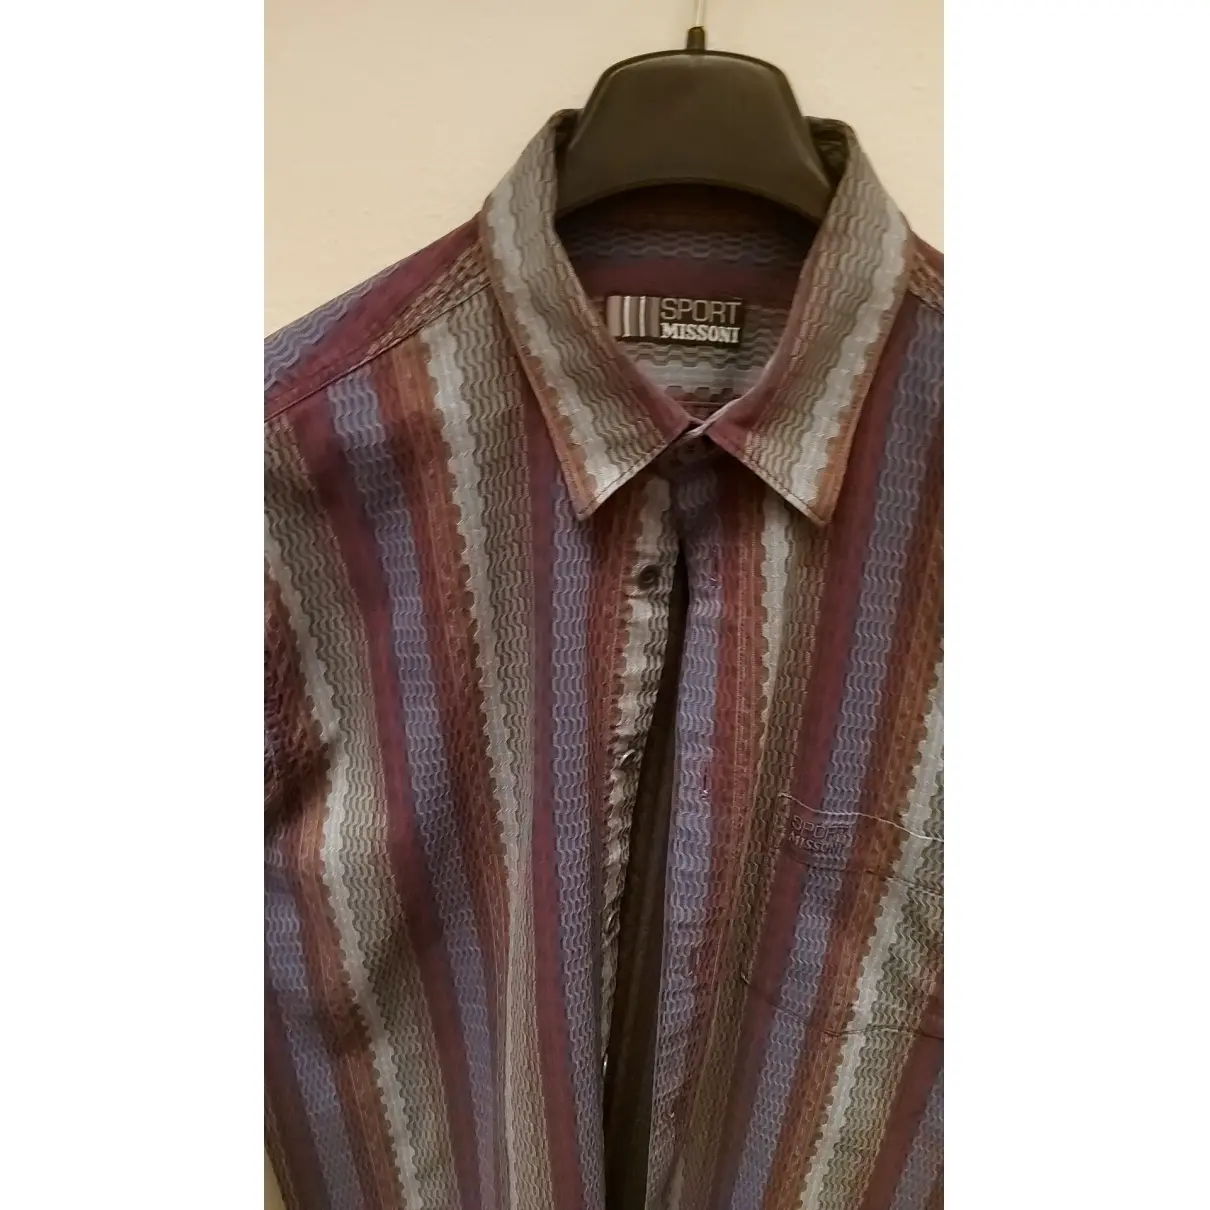 Shirt Missoni - Vintage